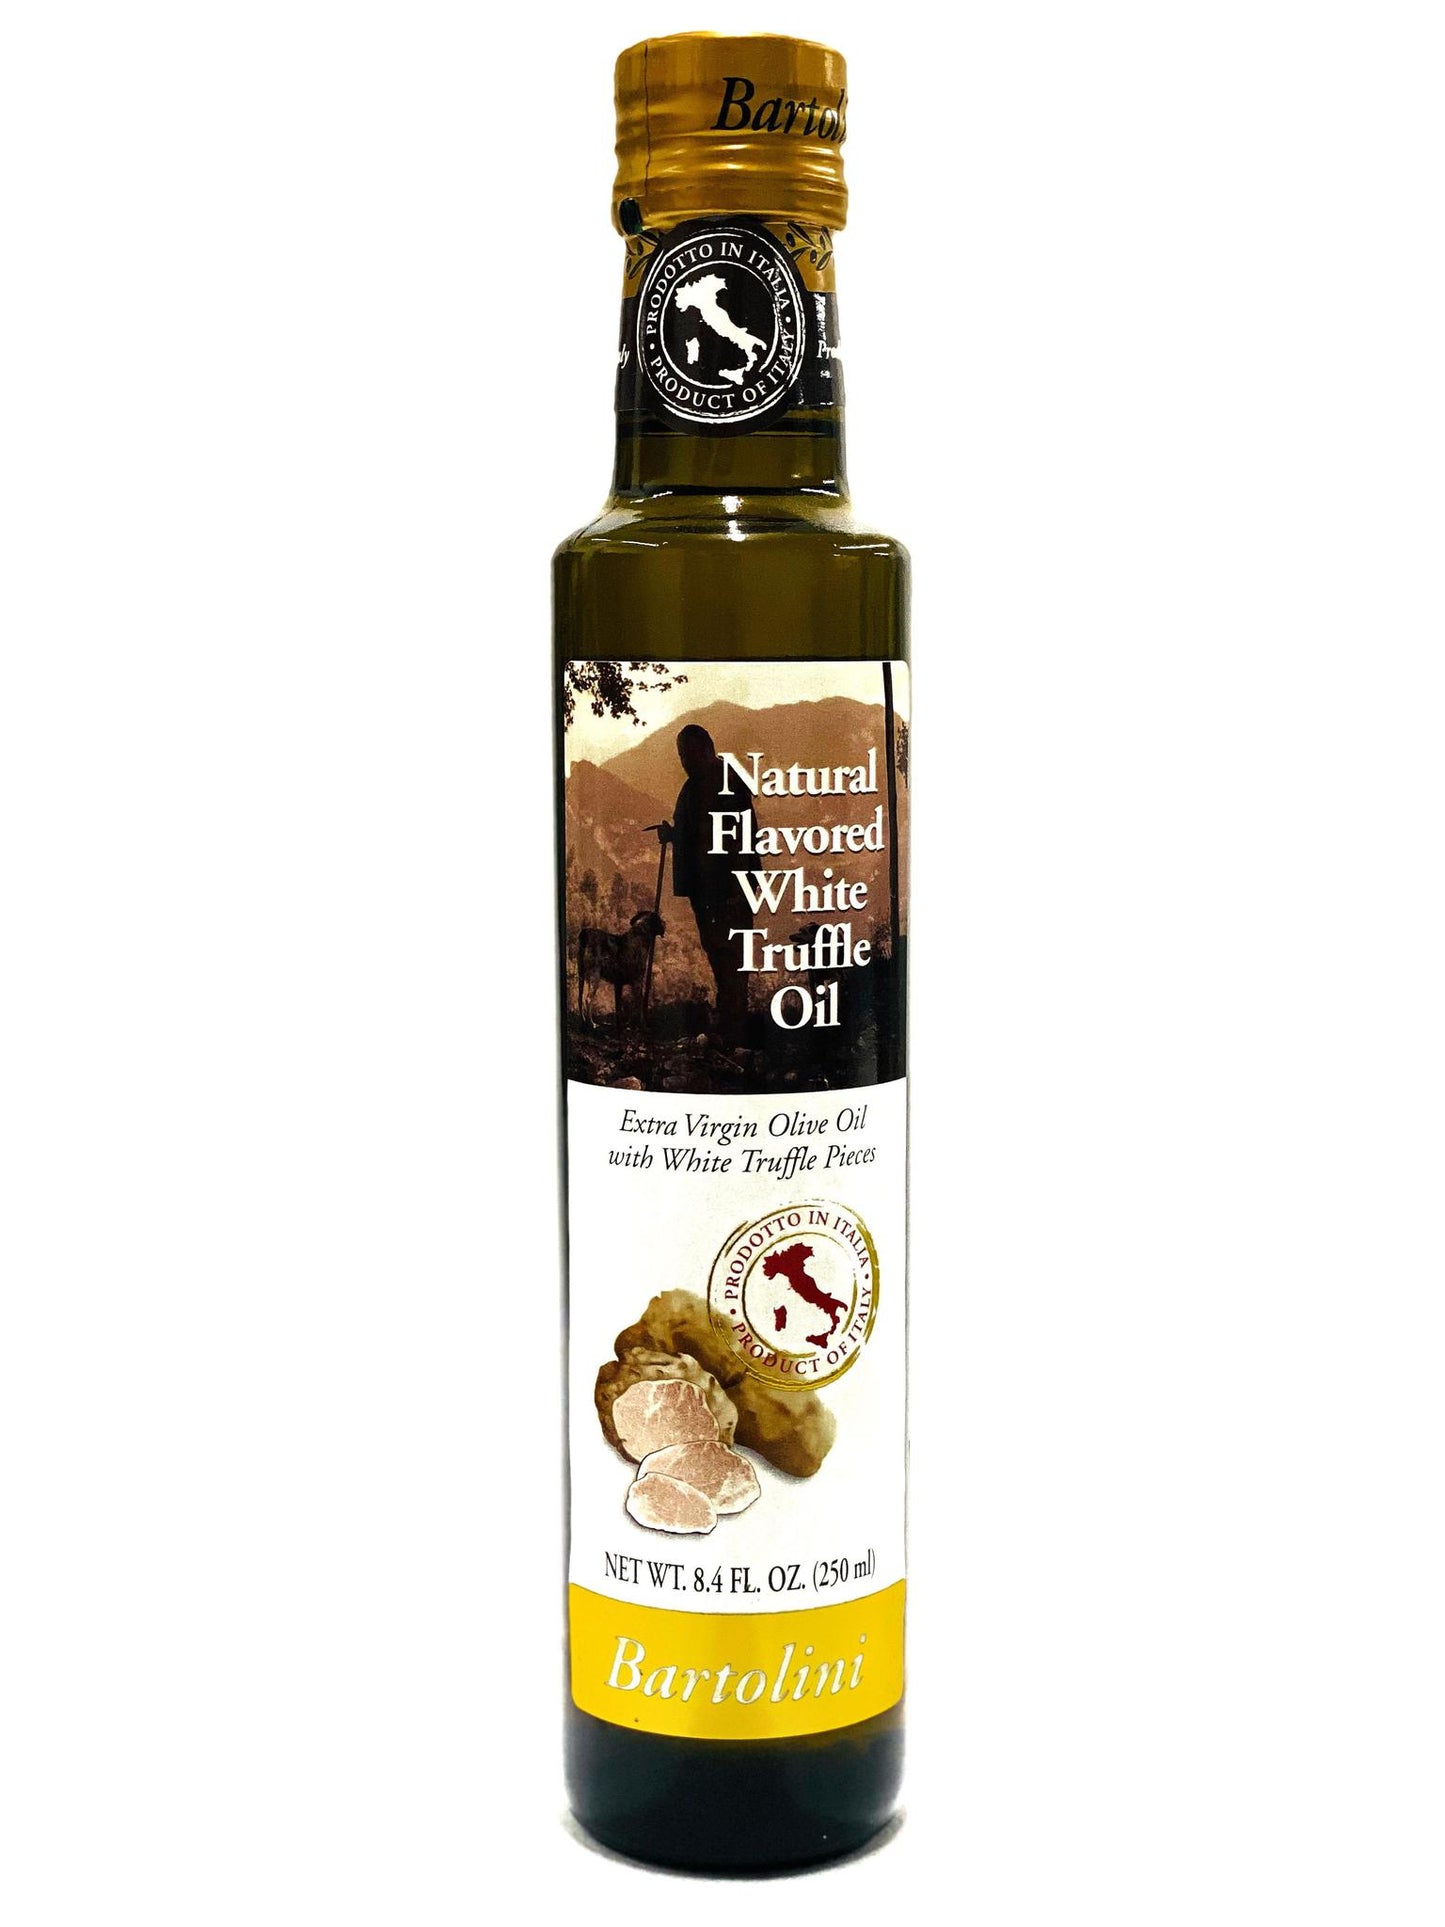 Bartolini Natural Flavored Black Truffle Oil, 3.4 fl oz